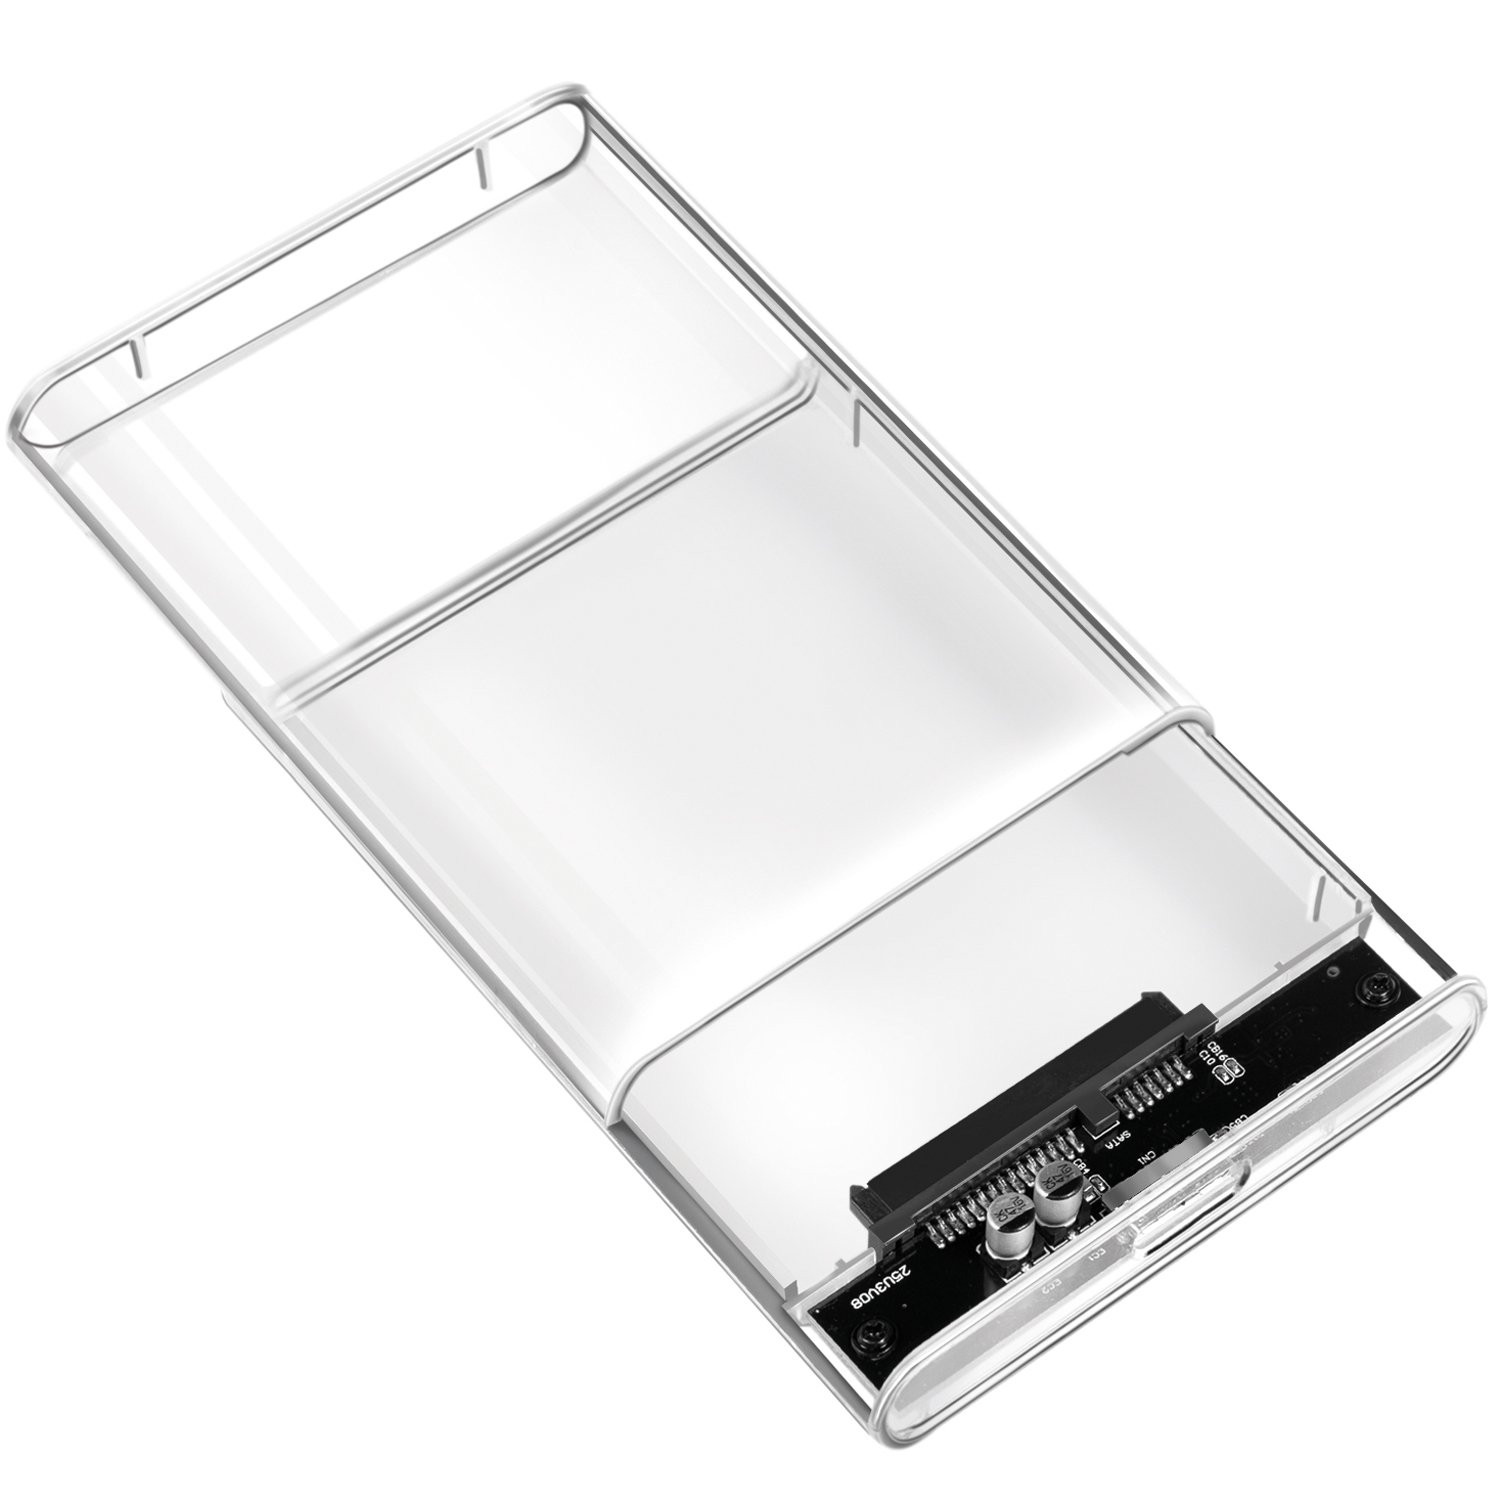 LogiLink Hårdiskkabinett 2,5 USB 3.0 Skruvfri design Transparent